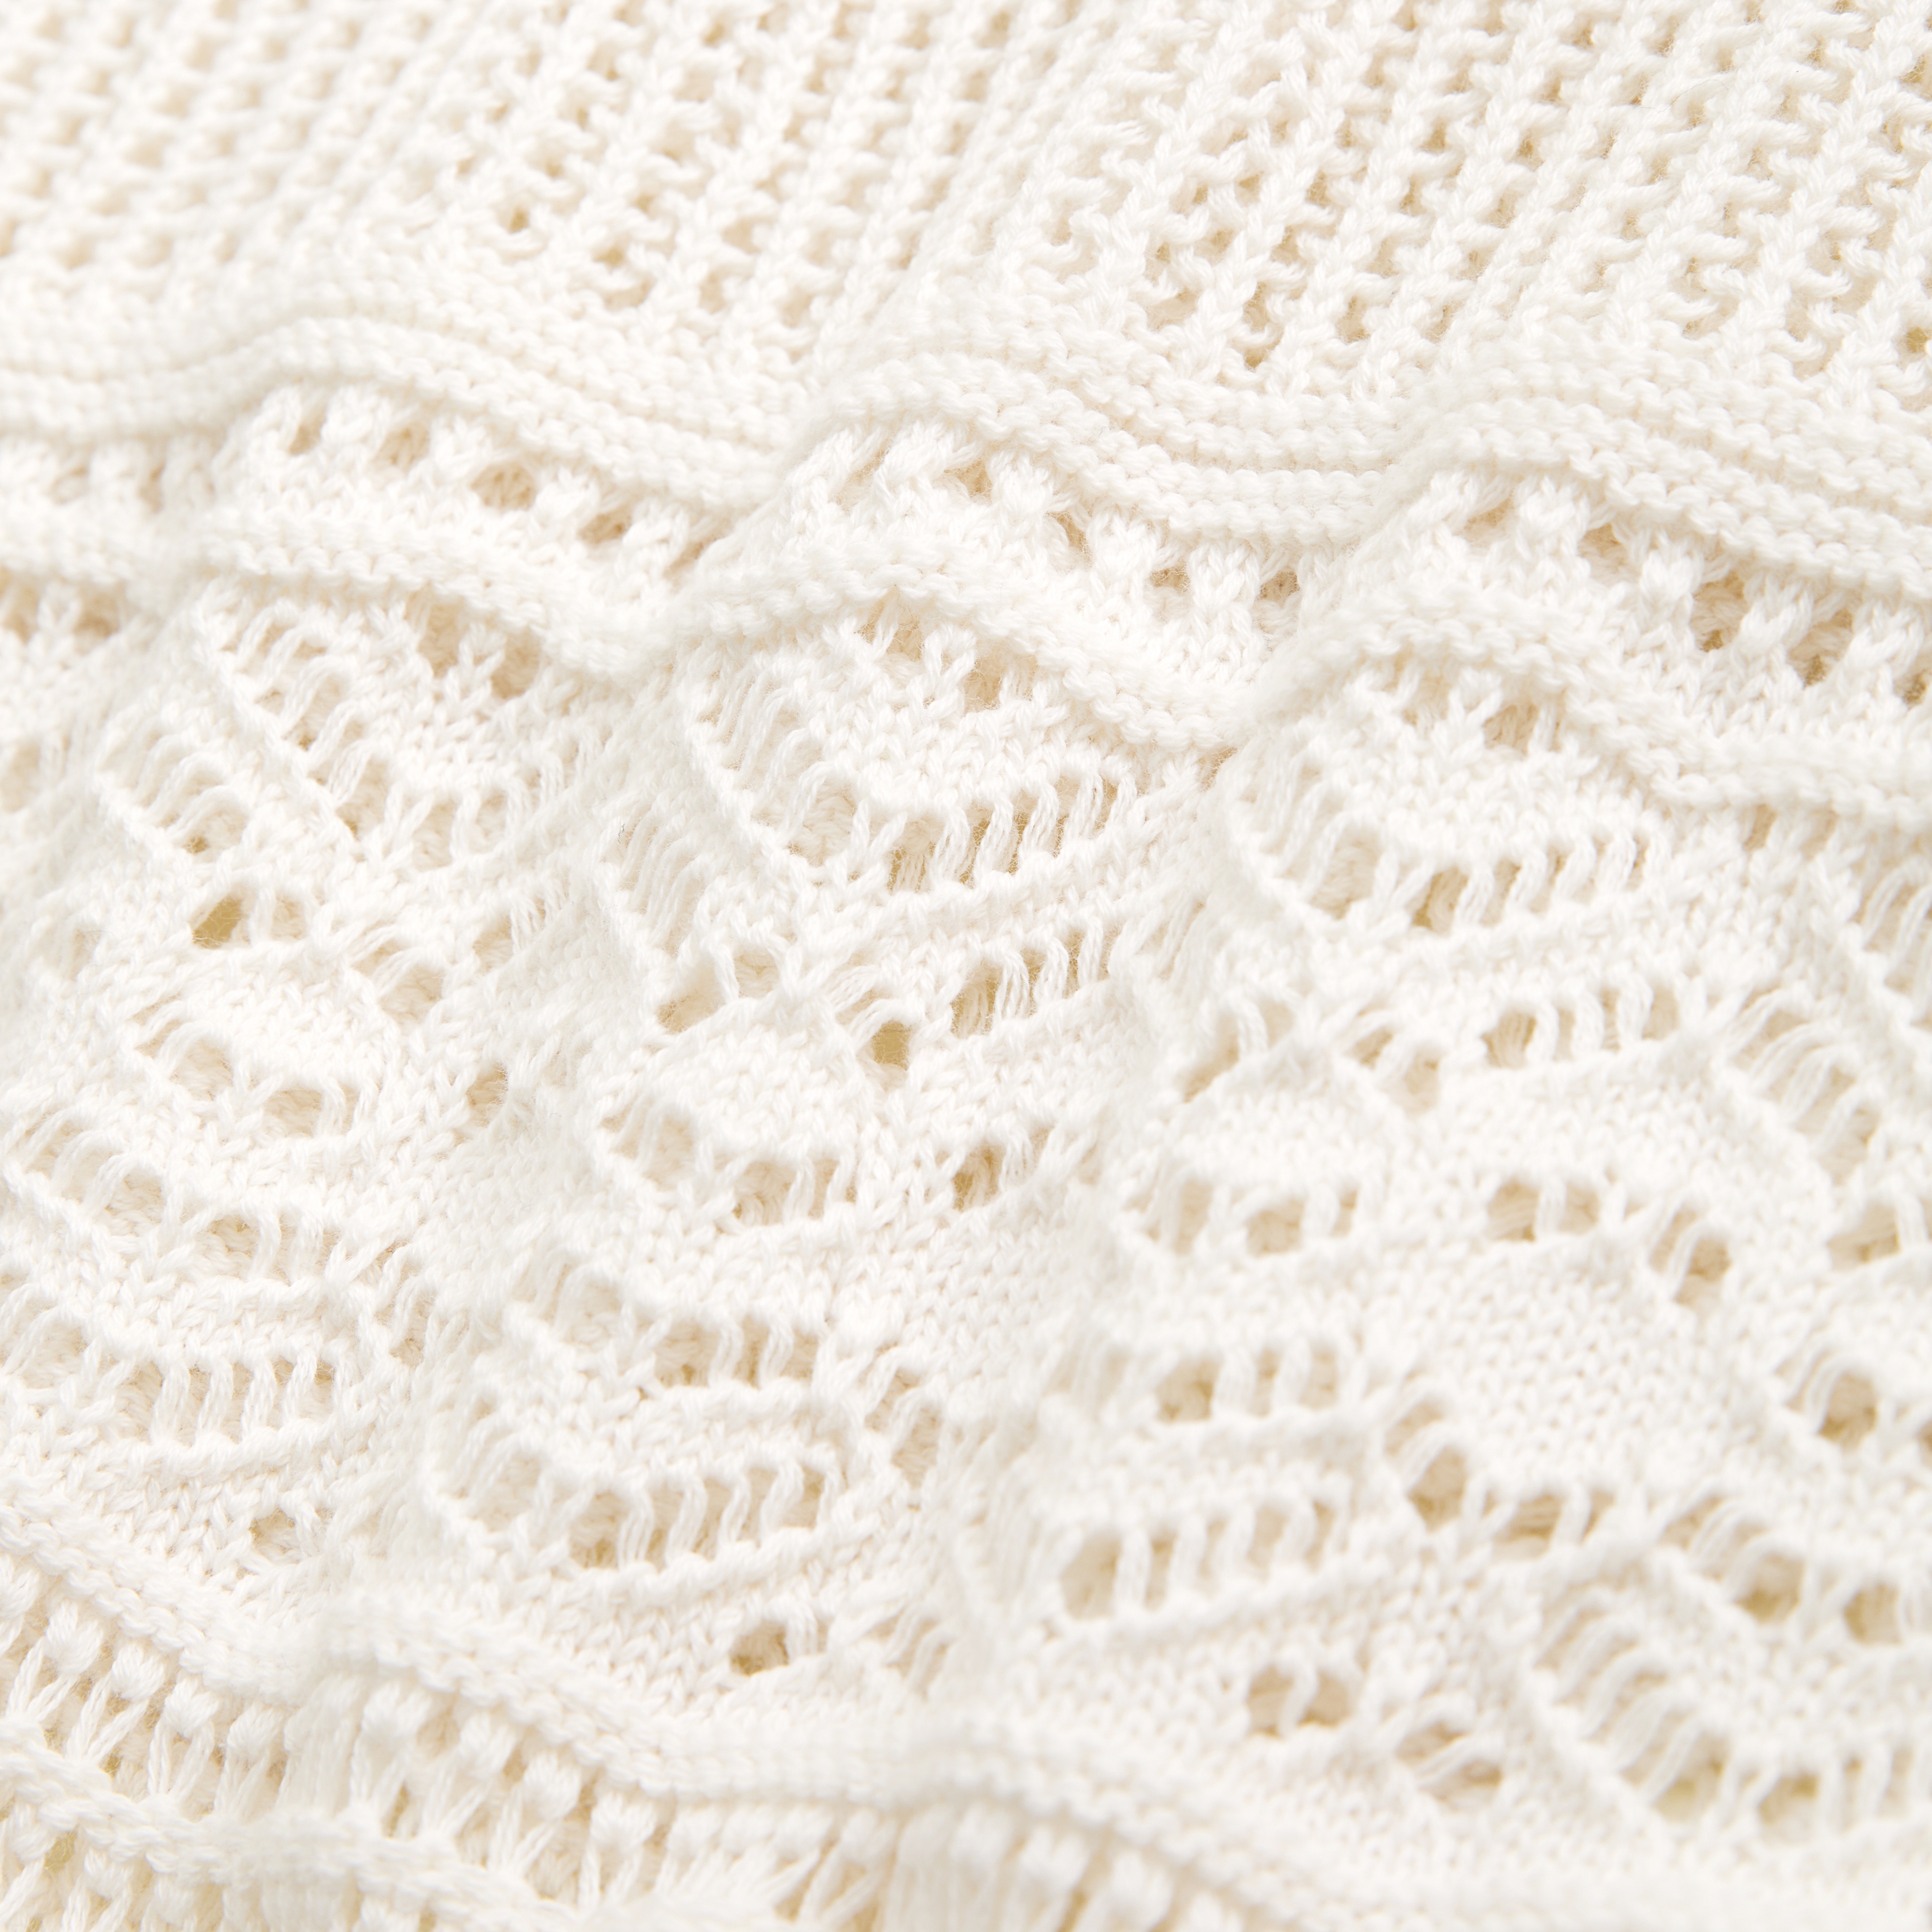 Rayure crochet cotton maxi skirt